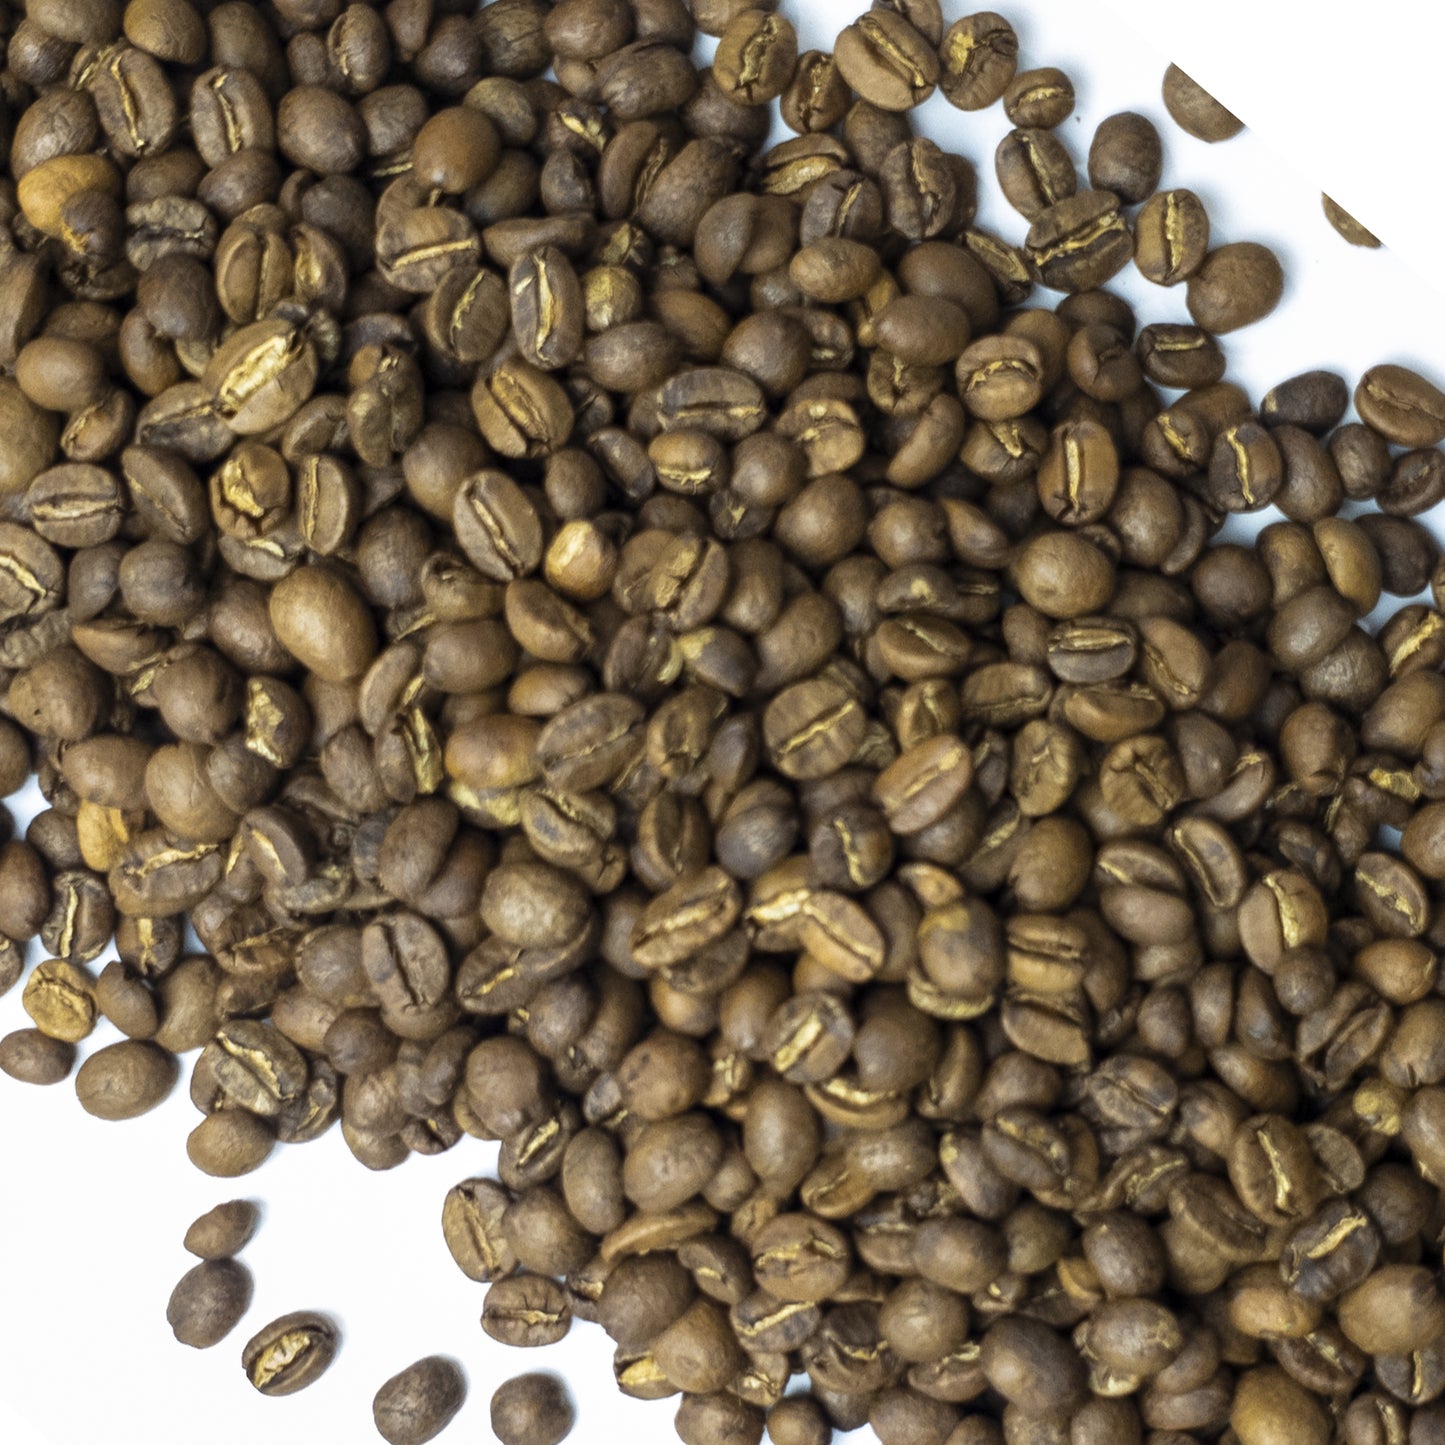 
                  
                    Red Fern | Ground Coffee | Medium Roast | Rose Rock Coffee | Air Roasted | 10oz | 12oz | 1lb | 5lb | Sample
                  
                